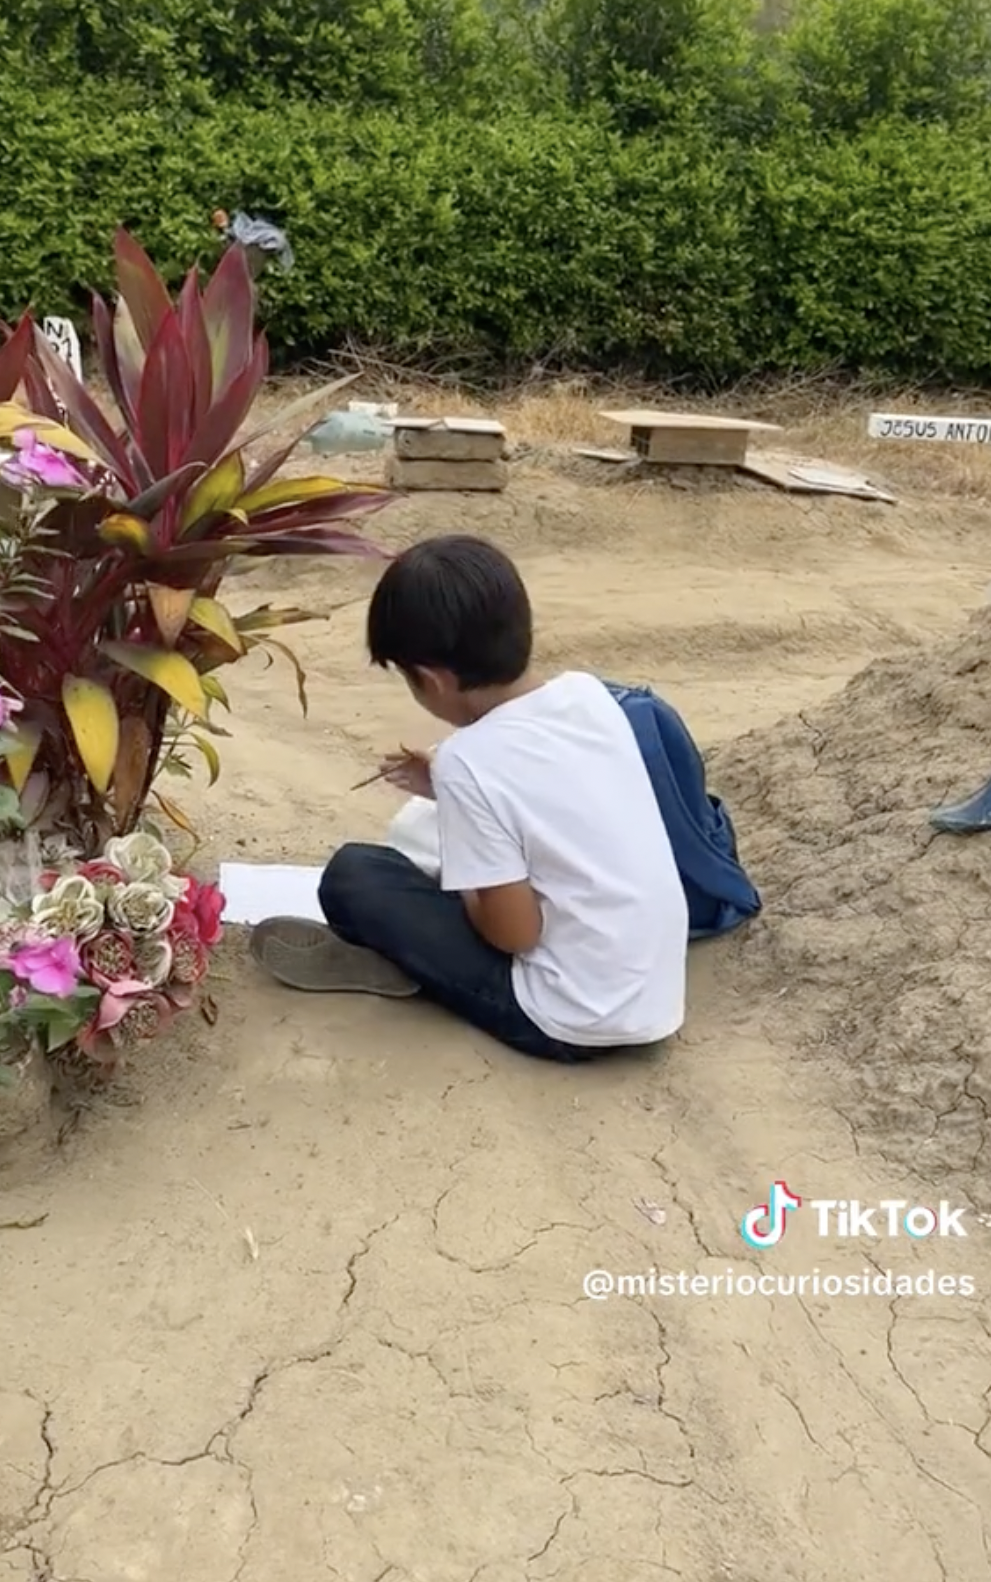 Kike haciendo los deberes en la tumba de su difunta madre | Foto: tiktok.com/@misteriocuriosidades